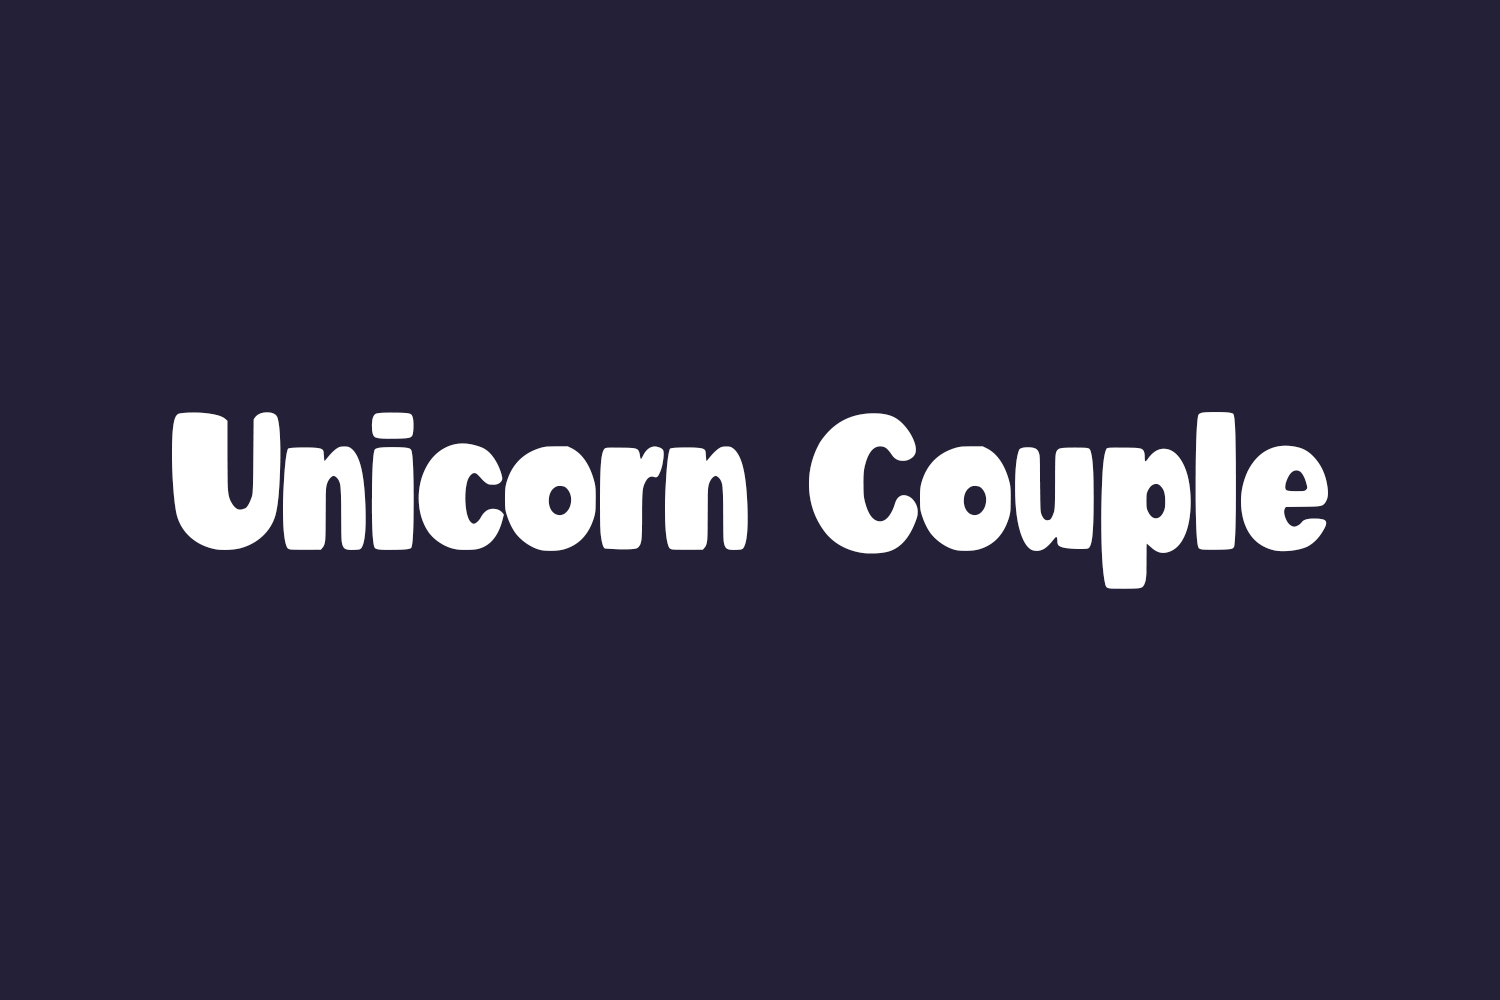 Unicorn Couple Free Font